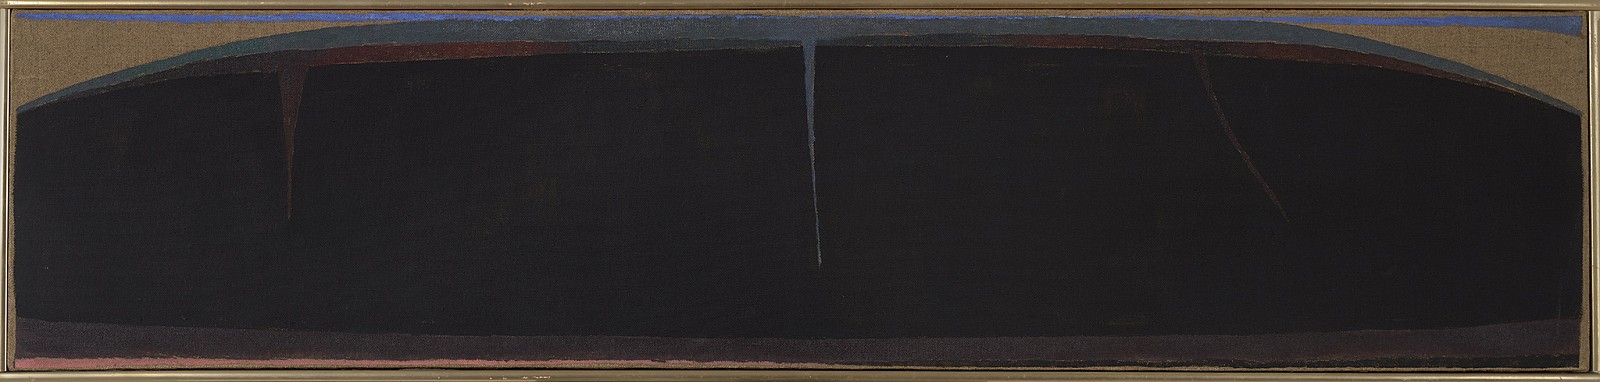 Stanley Boxer, Lafayette Cast, 1972
Oil on canvas, 10 x 44 in. (25.4 x 111.8 cm)
BOX-00097